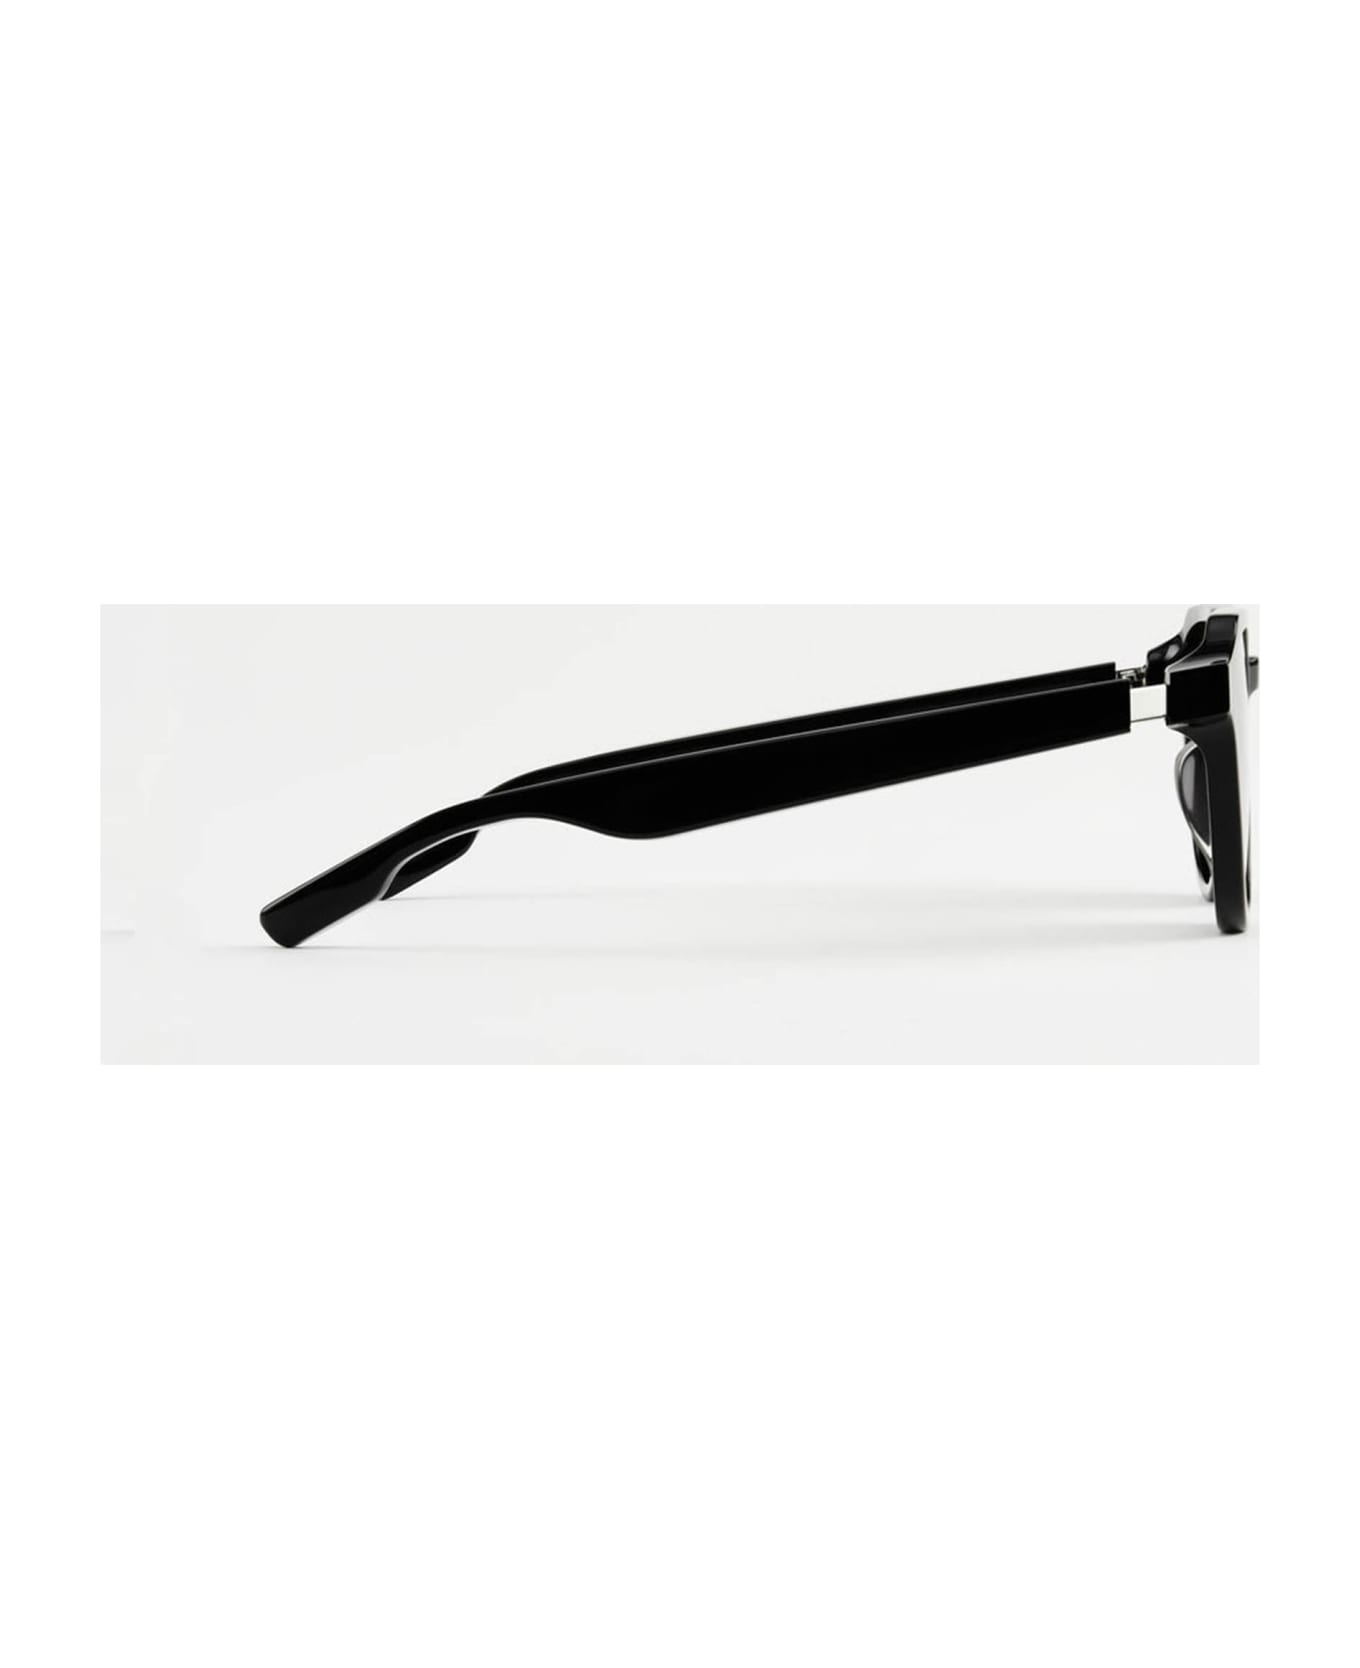 Aether Model D1 - Black Sunglasses - Black